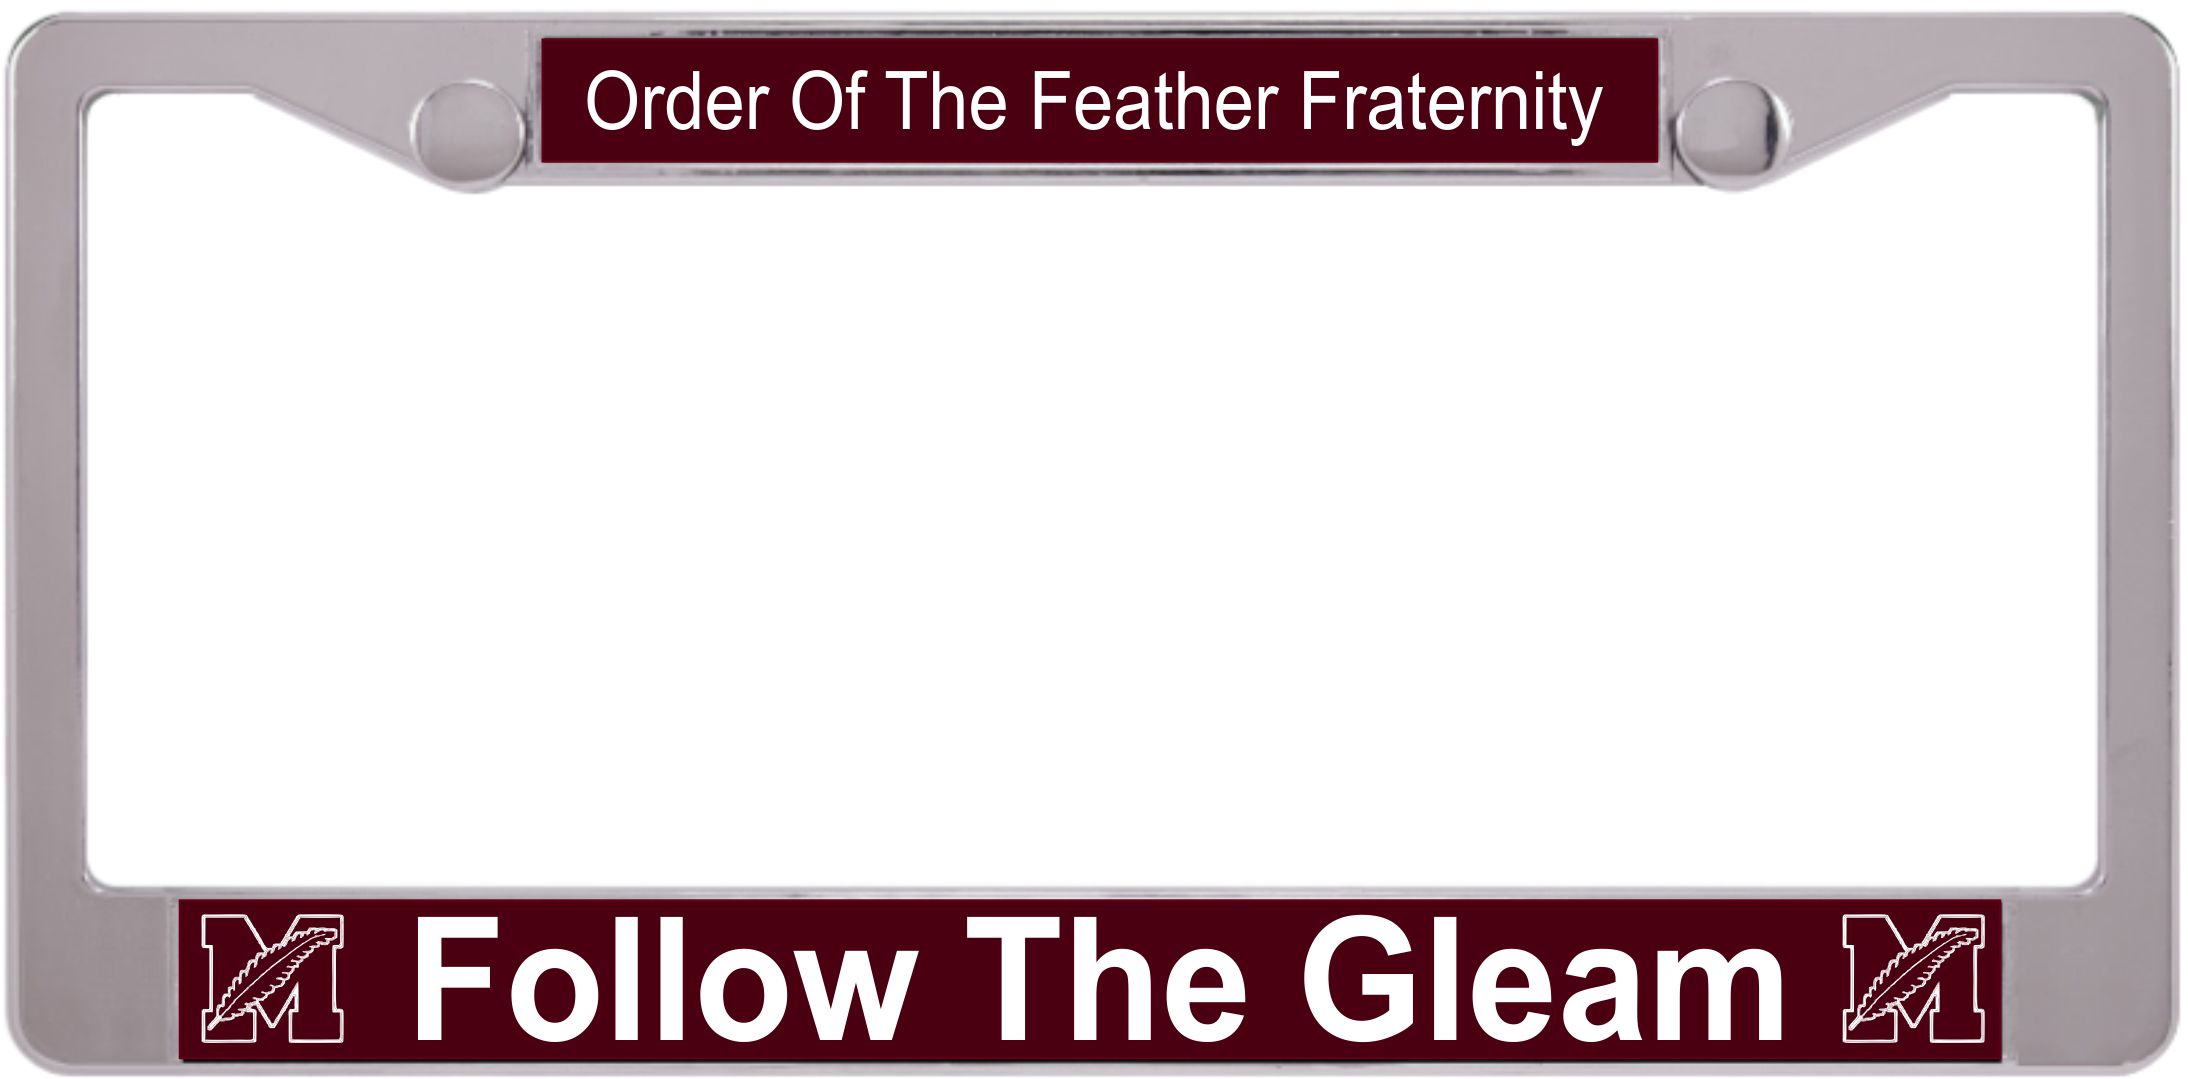 Follow The Gleam - Plastic license plate frame